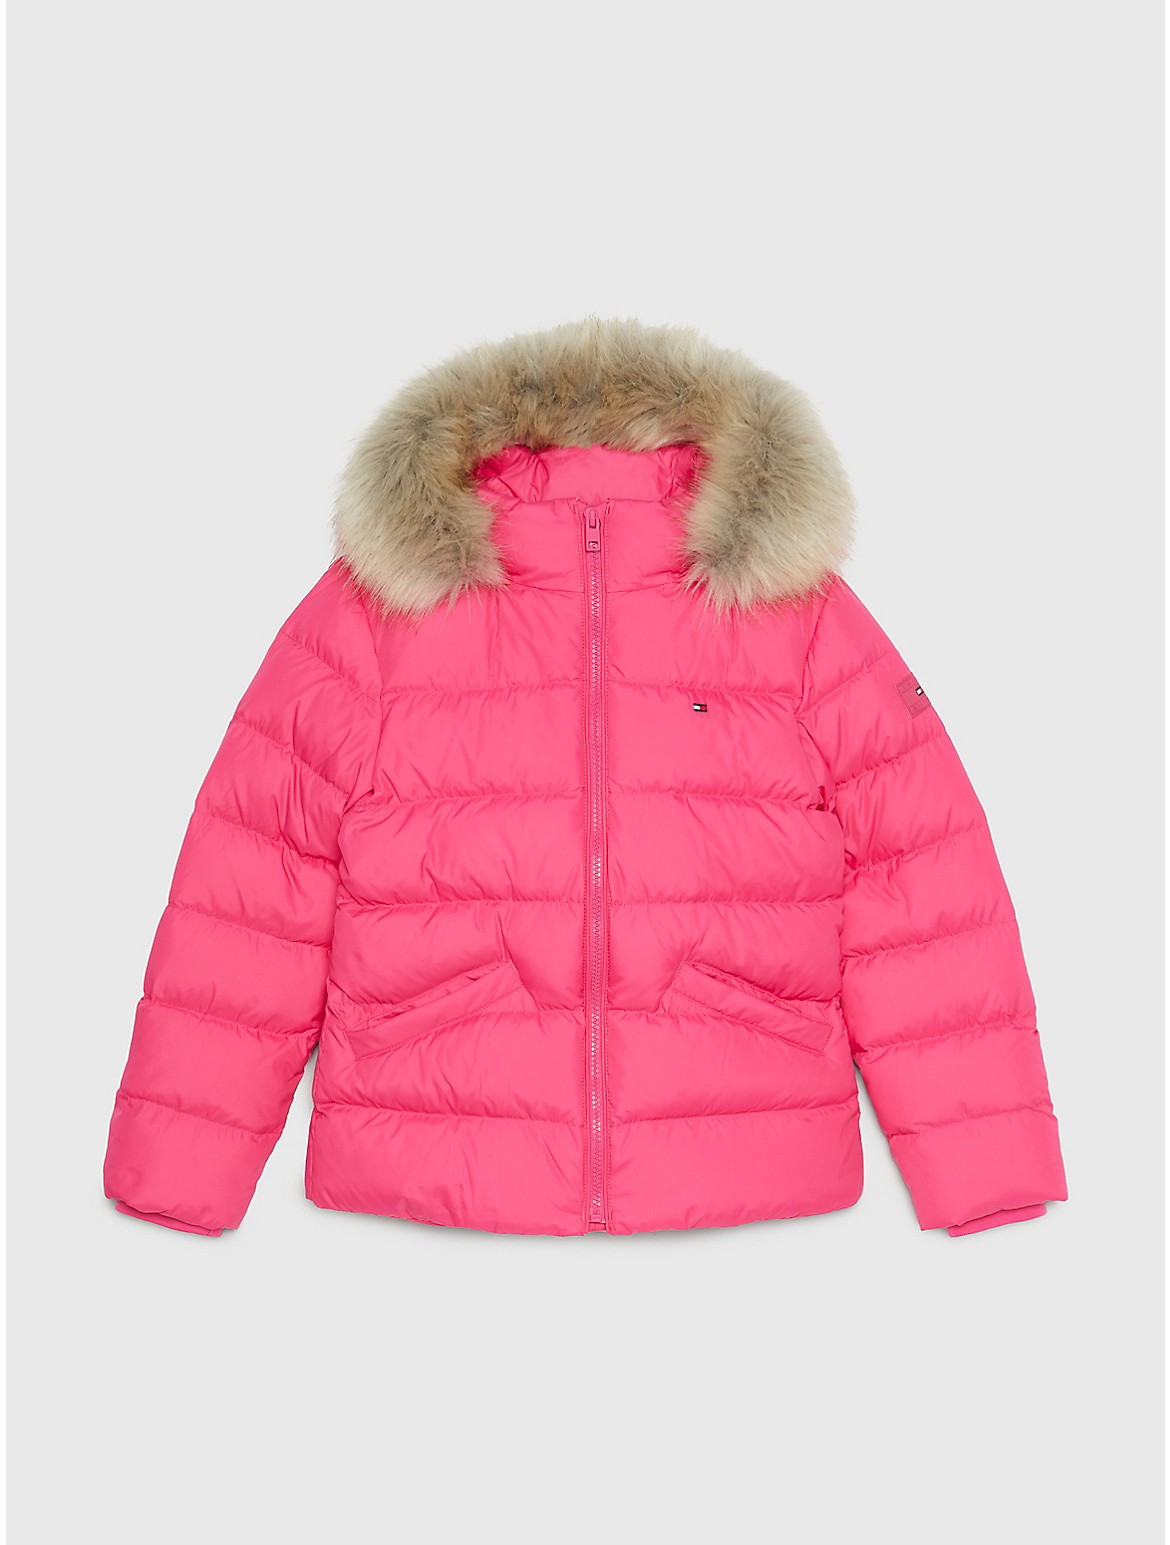 Tommy Hilfiger Girls' Kids' Faux Fur Hood Down Jacket